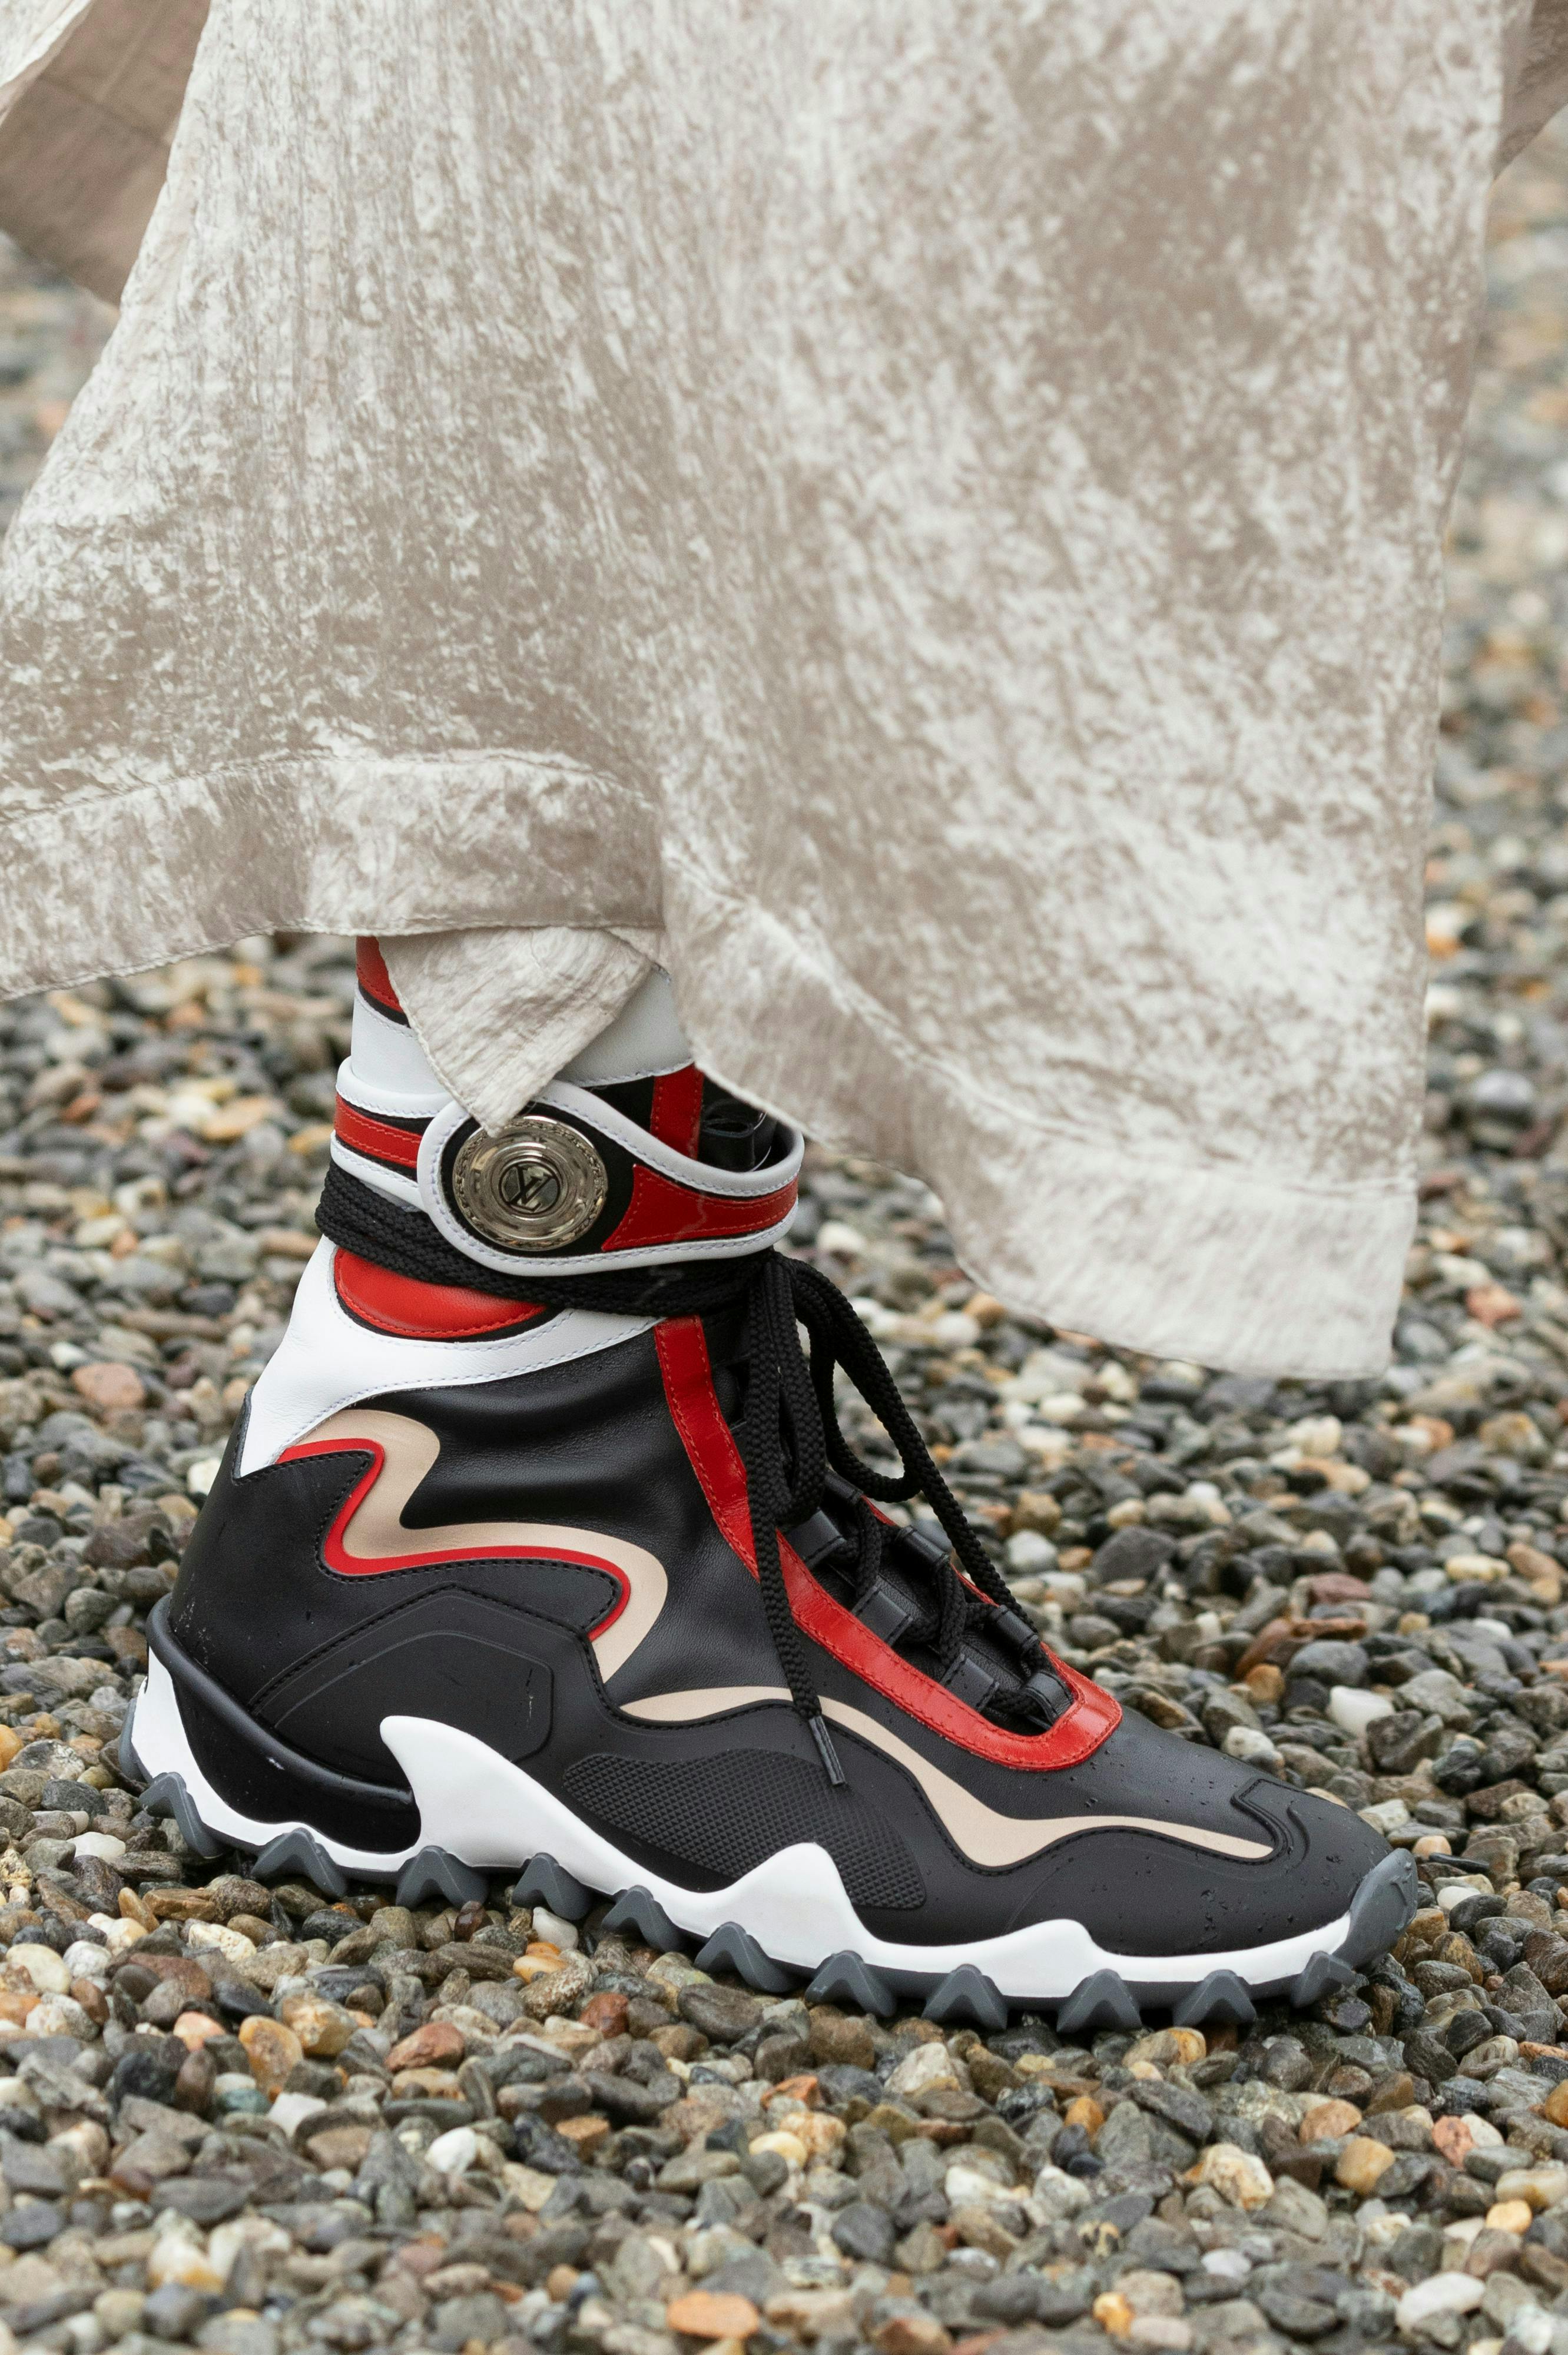 clothing footwear shoe sneaker road gravel pebble person